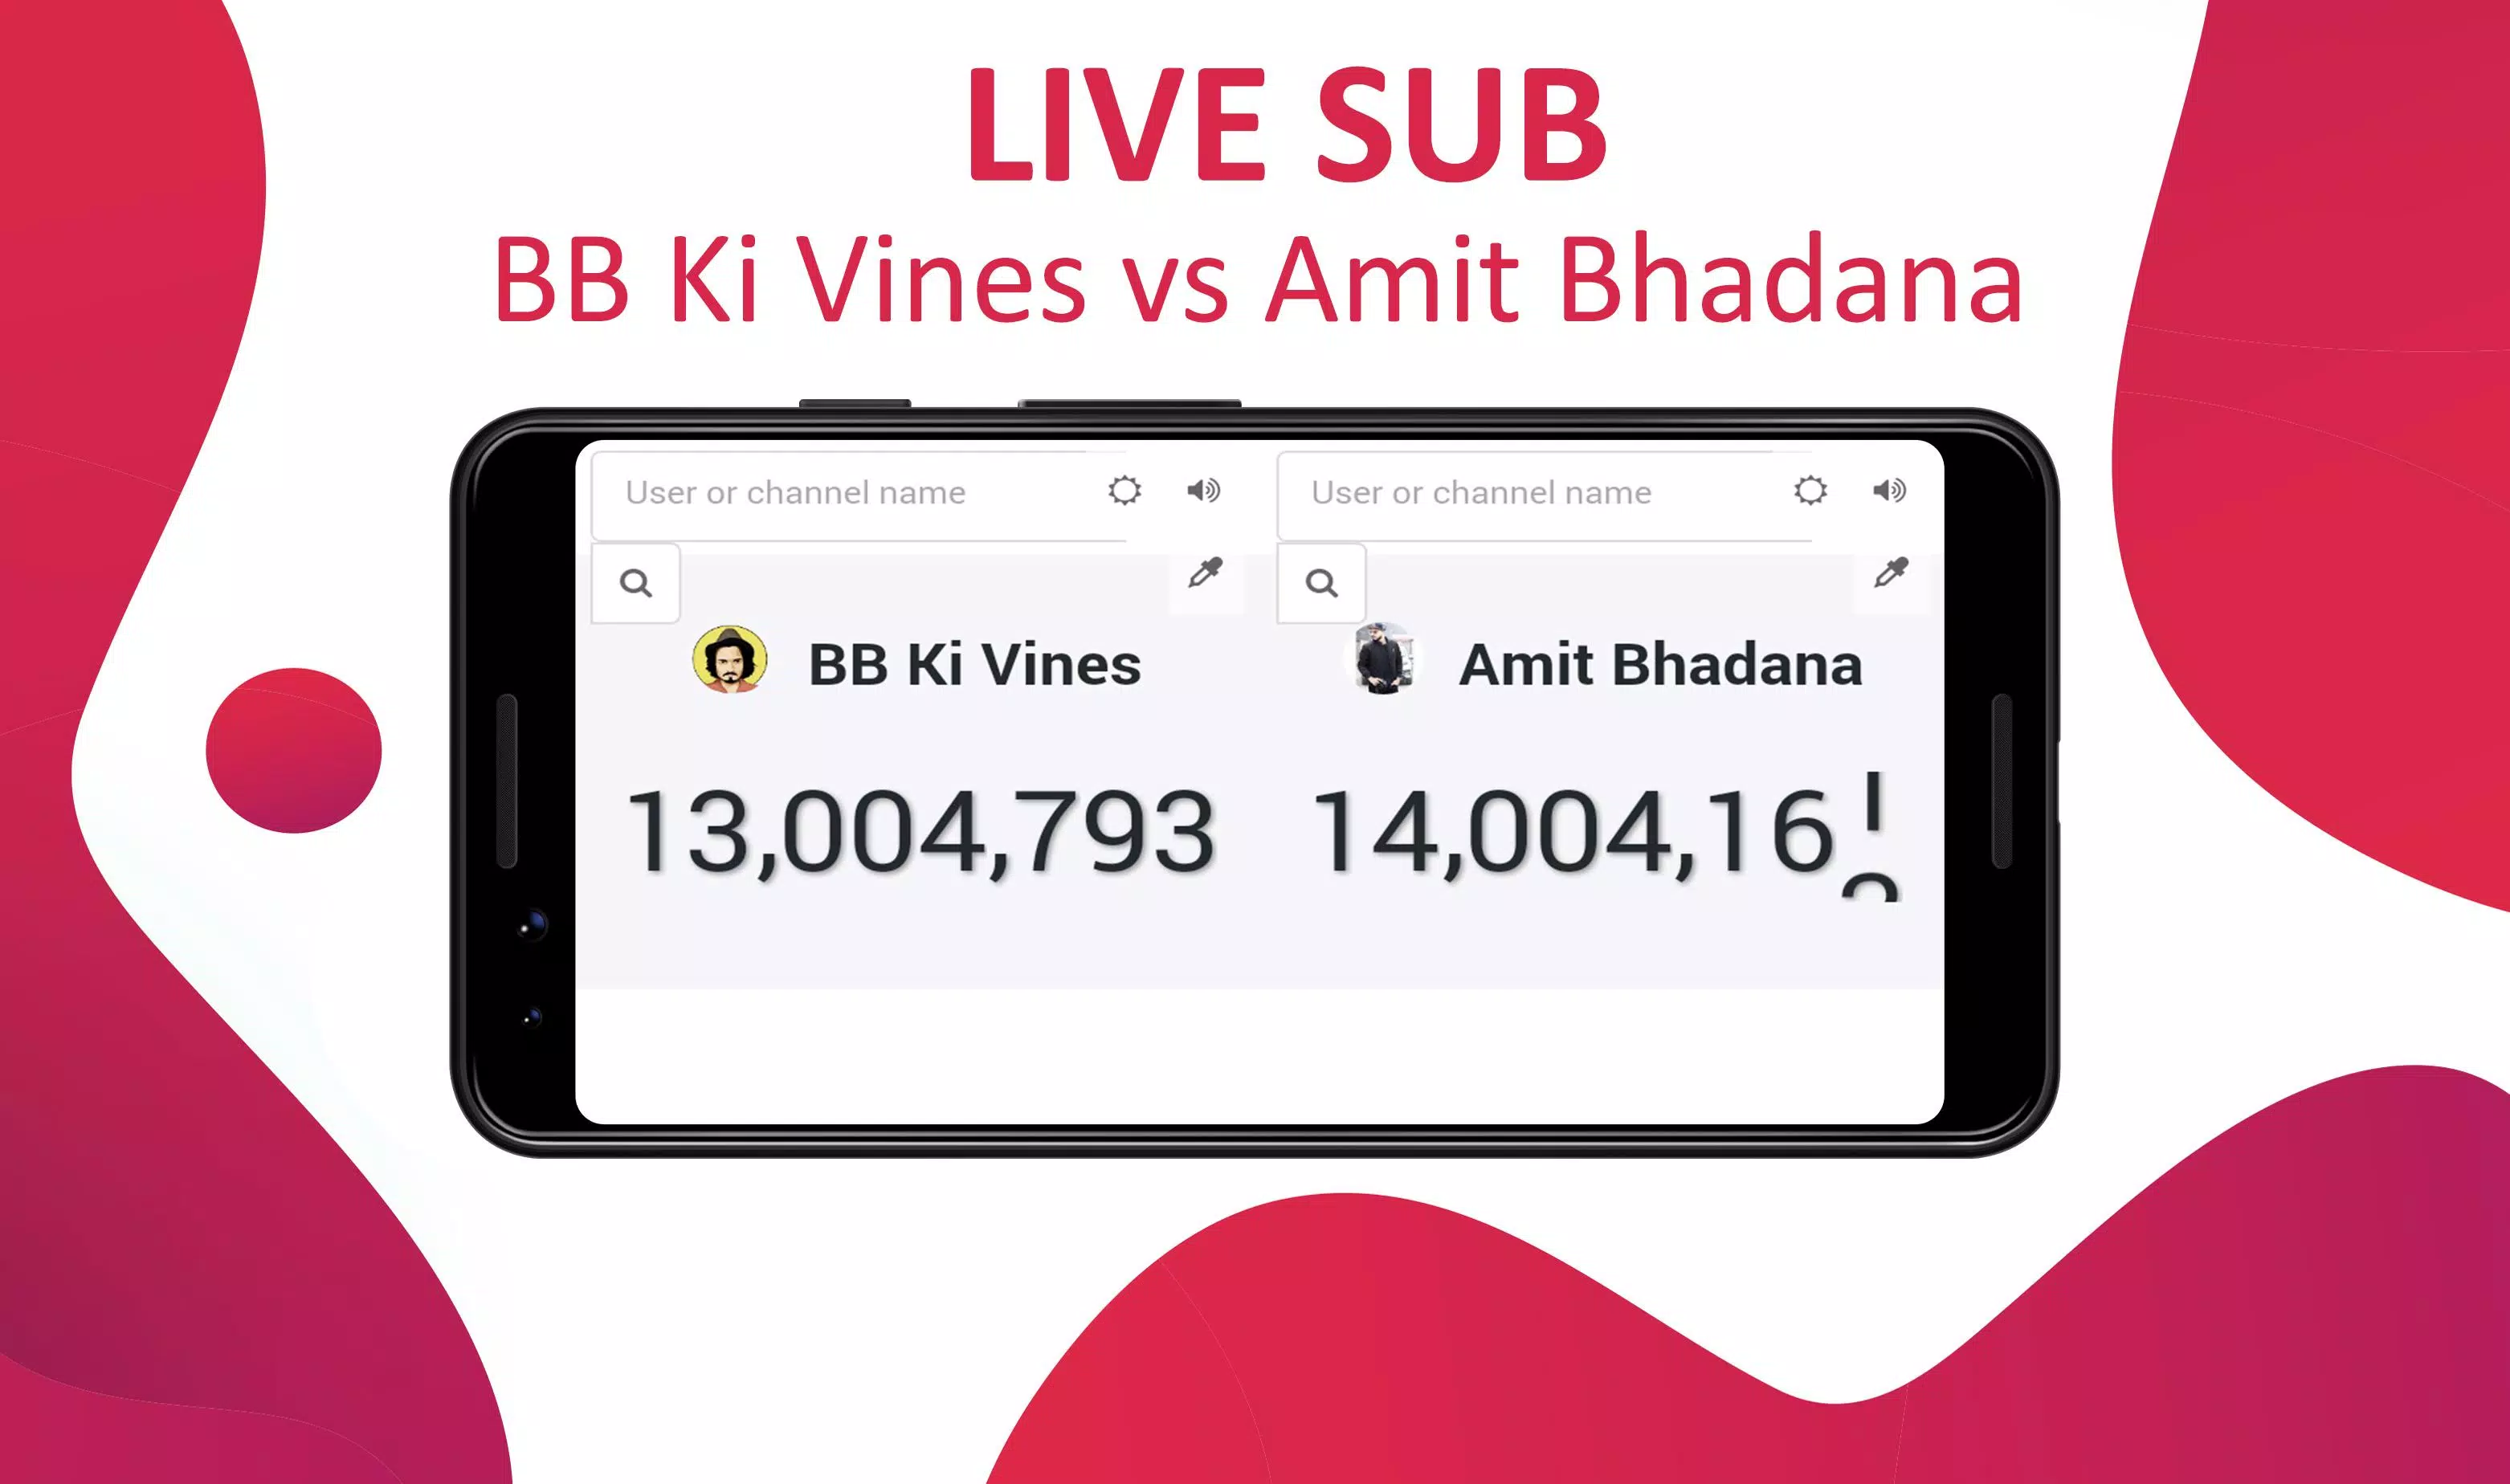 Amit Bhadana Live Subscriber Count